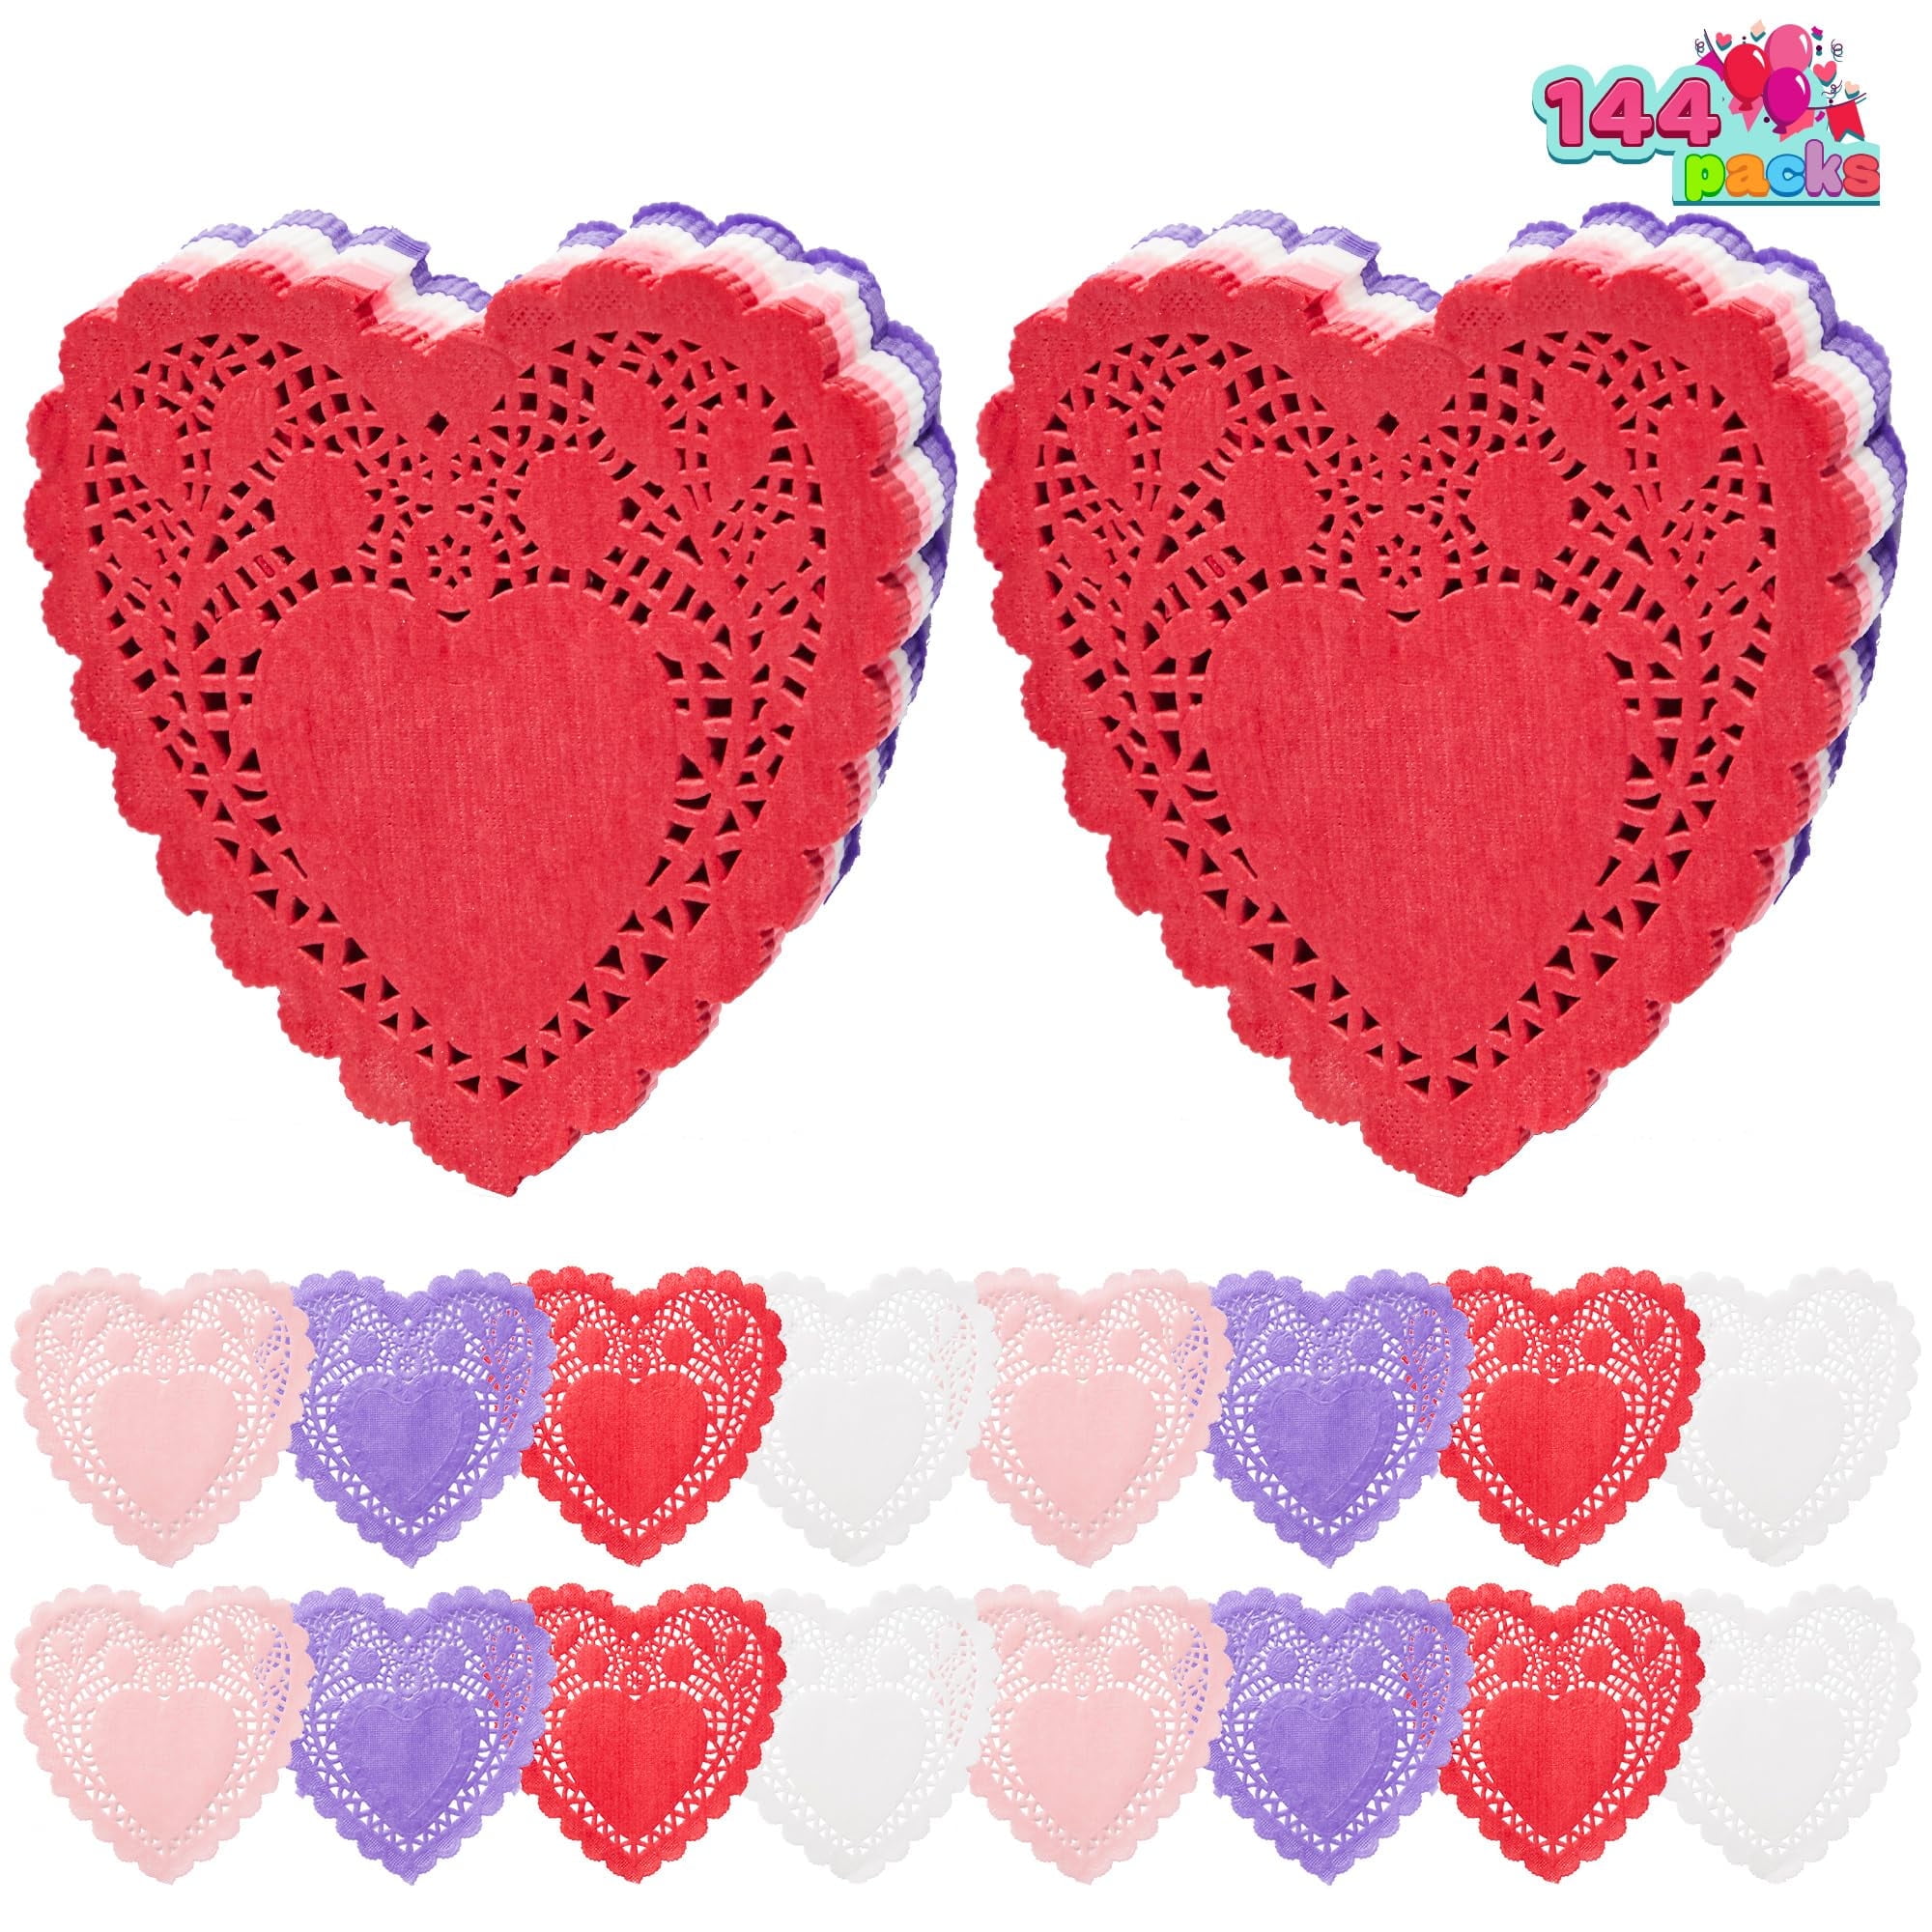 Heart Doilies Valentine Art Sticker Set Doily Vintage Valentine's Day Paper  Hearts Heart Mod Hearts Love Heart Stickers 